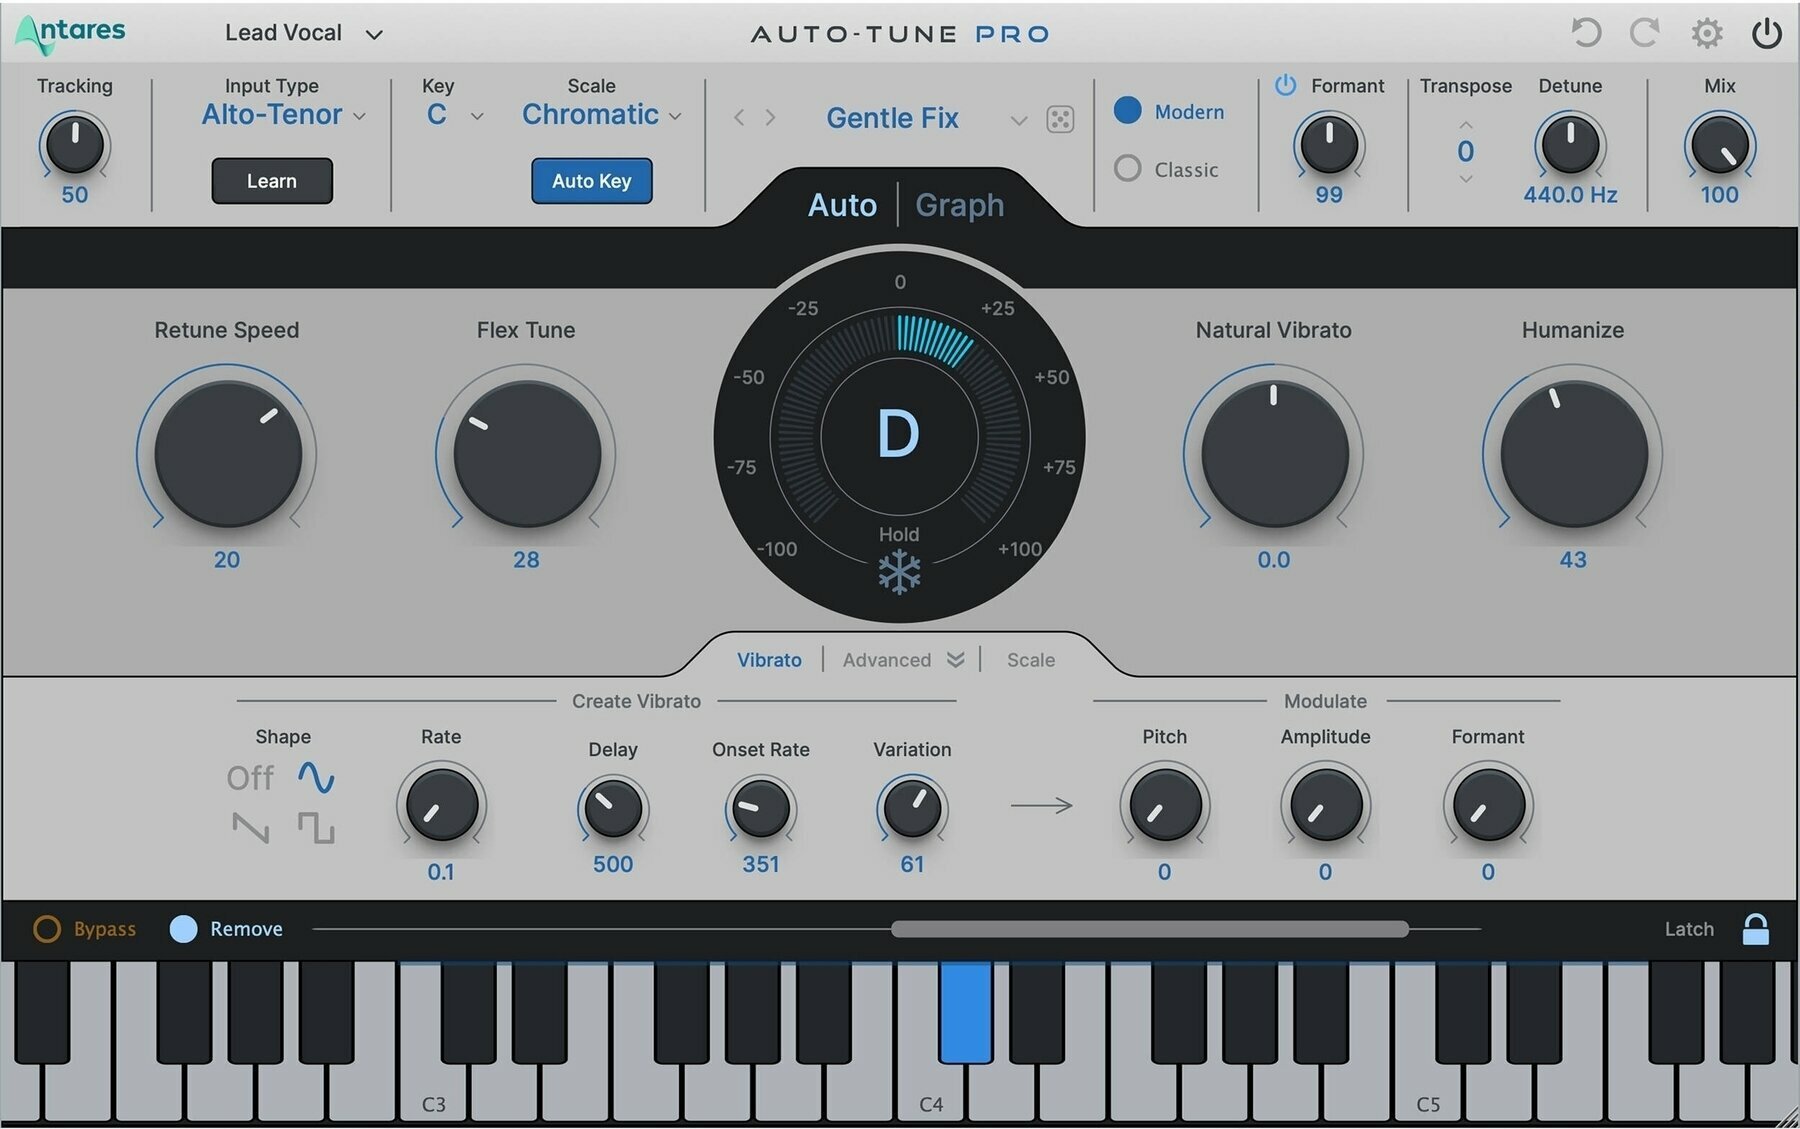 Tonstudio-Software VST-Instrument Antares Auto-Tune Vocodist (Digitales Produkt)